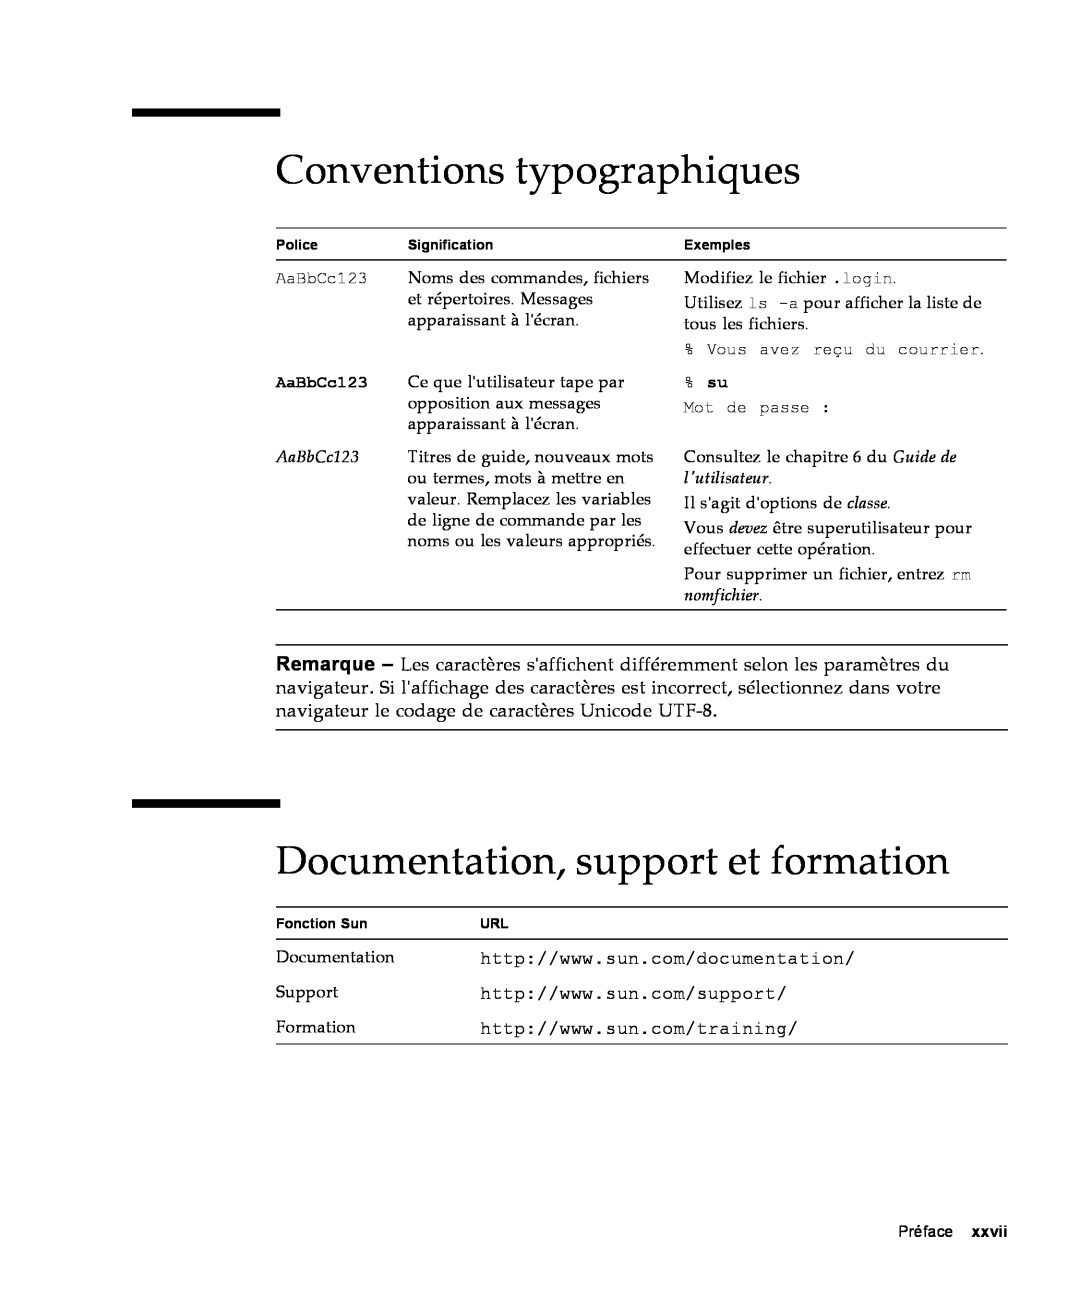 Sun Microsystems SG-XPCIE1FC-QF8-Z, SG-XPCIE2FC-QF8-Z manual Conventions typographiques, Documentation, support et formation 